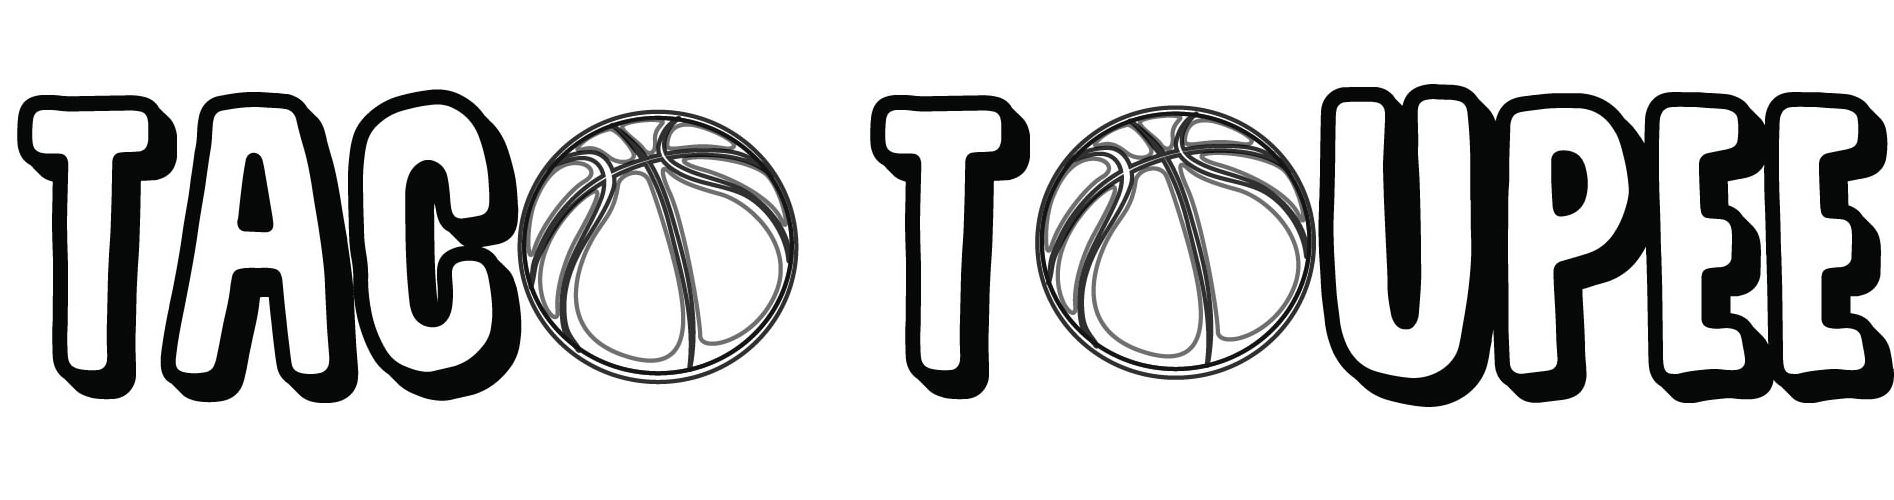 Trademark Logo TACO TOUPEE